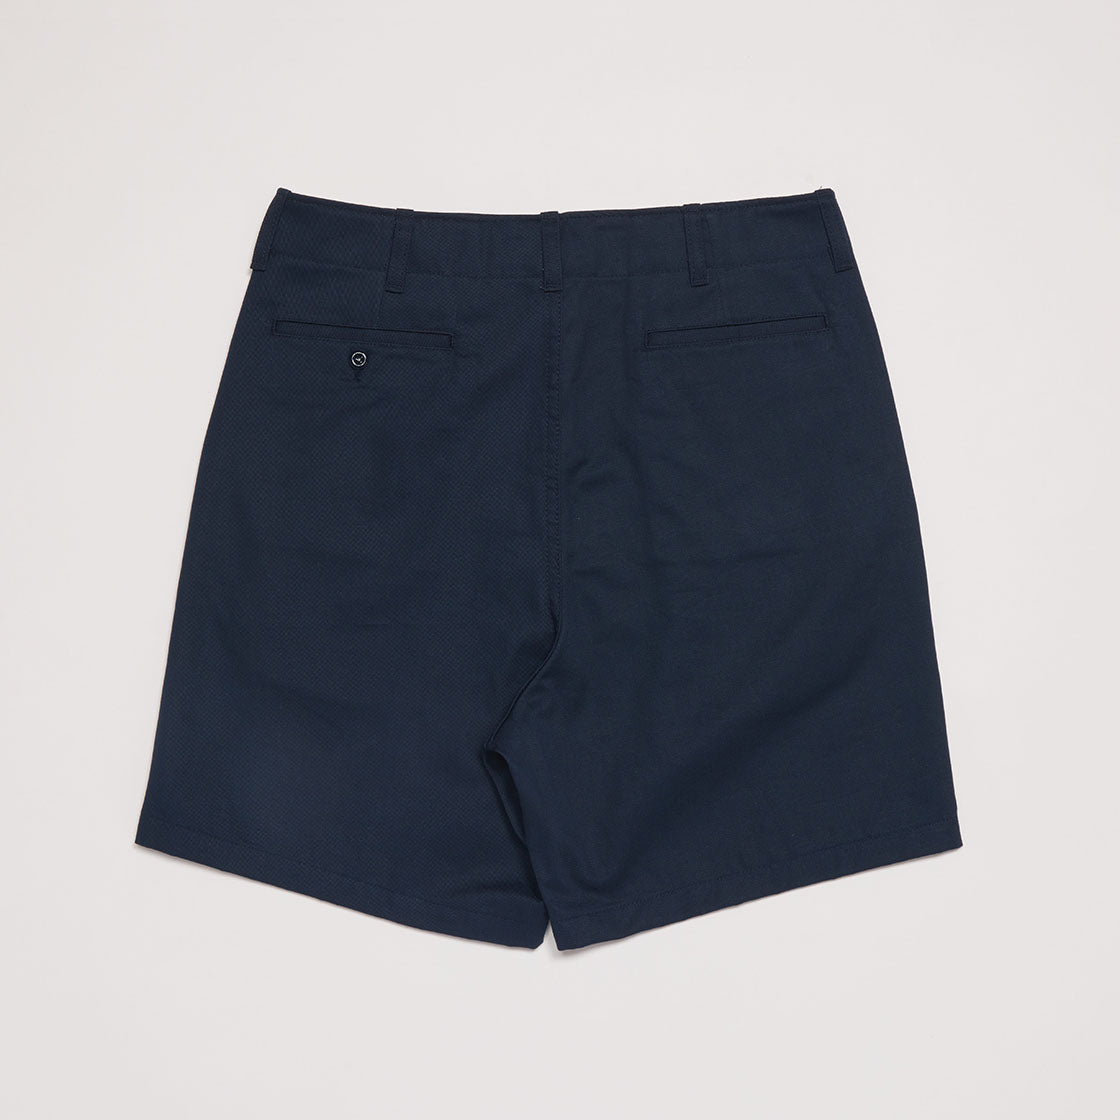 New Boy Scout Shorts (Navy)